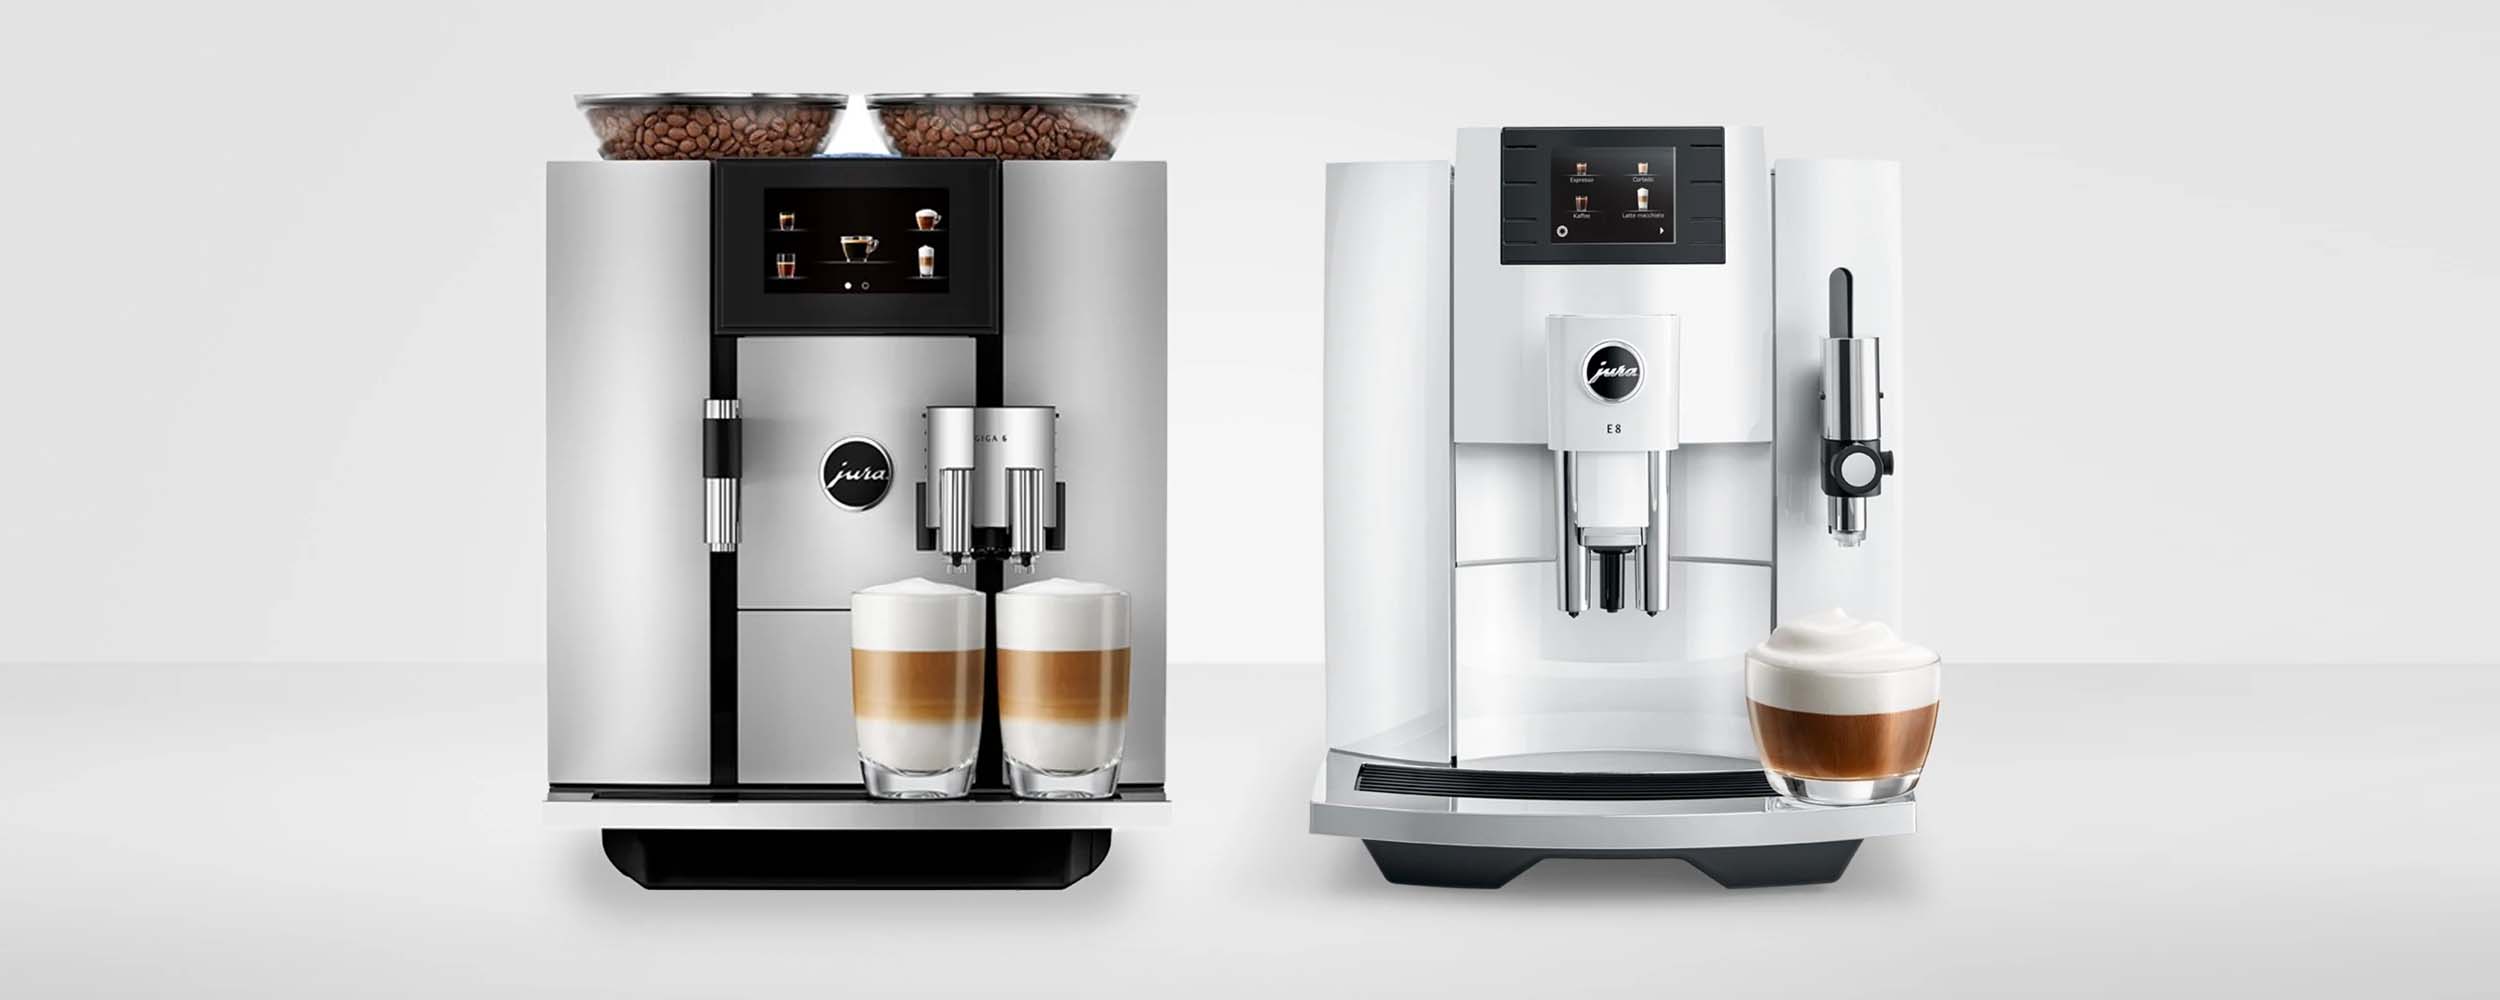 What Do The Jura Coffee Machine Reviews Say?